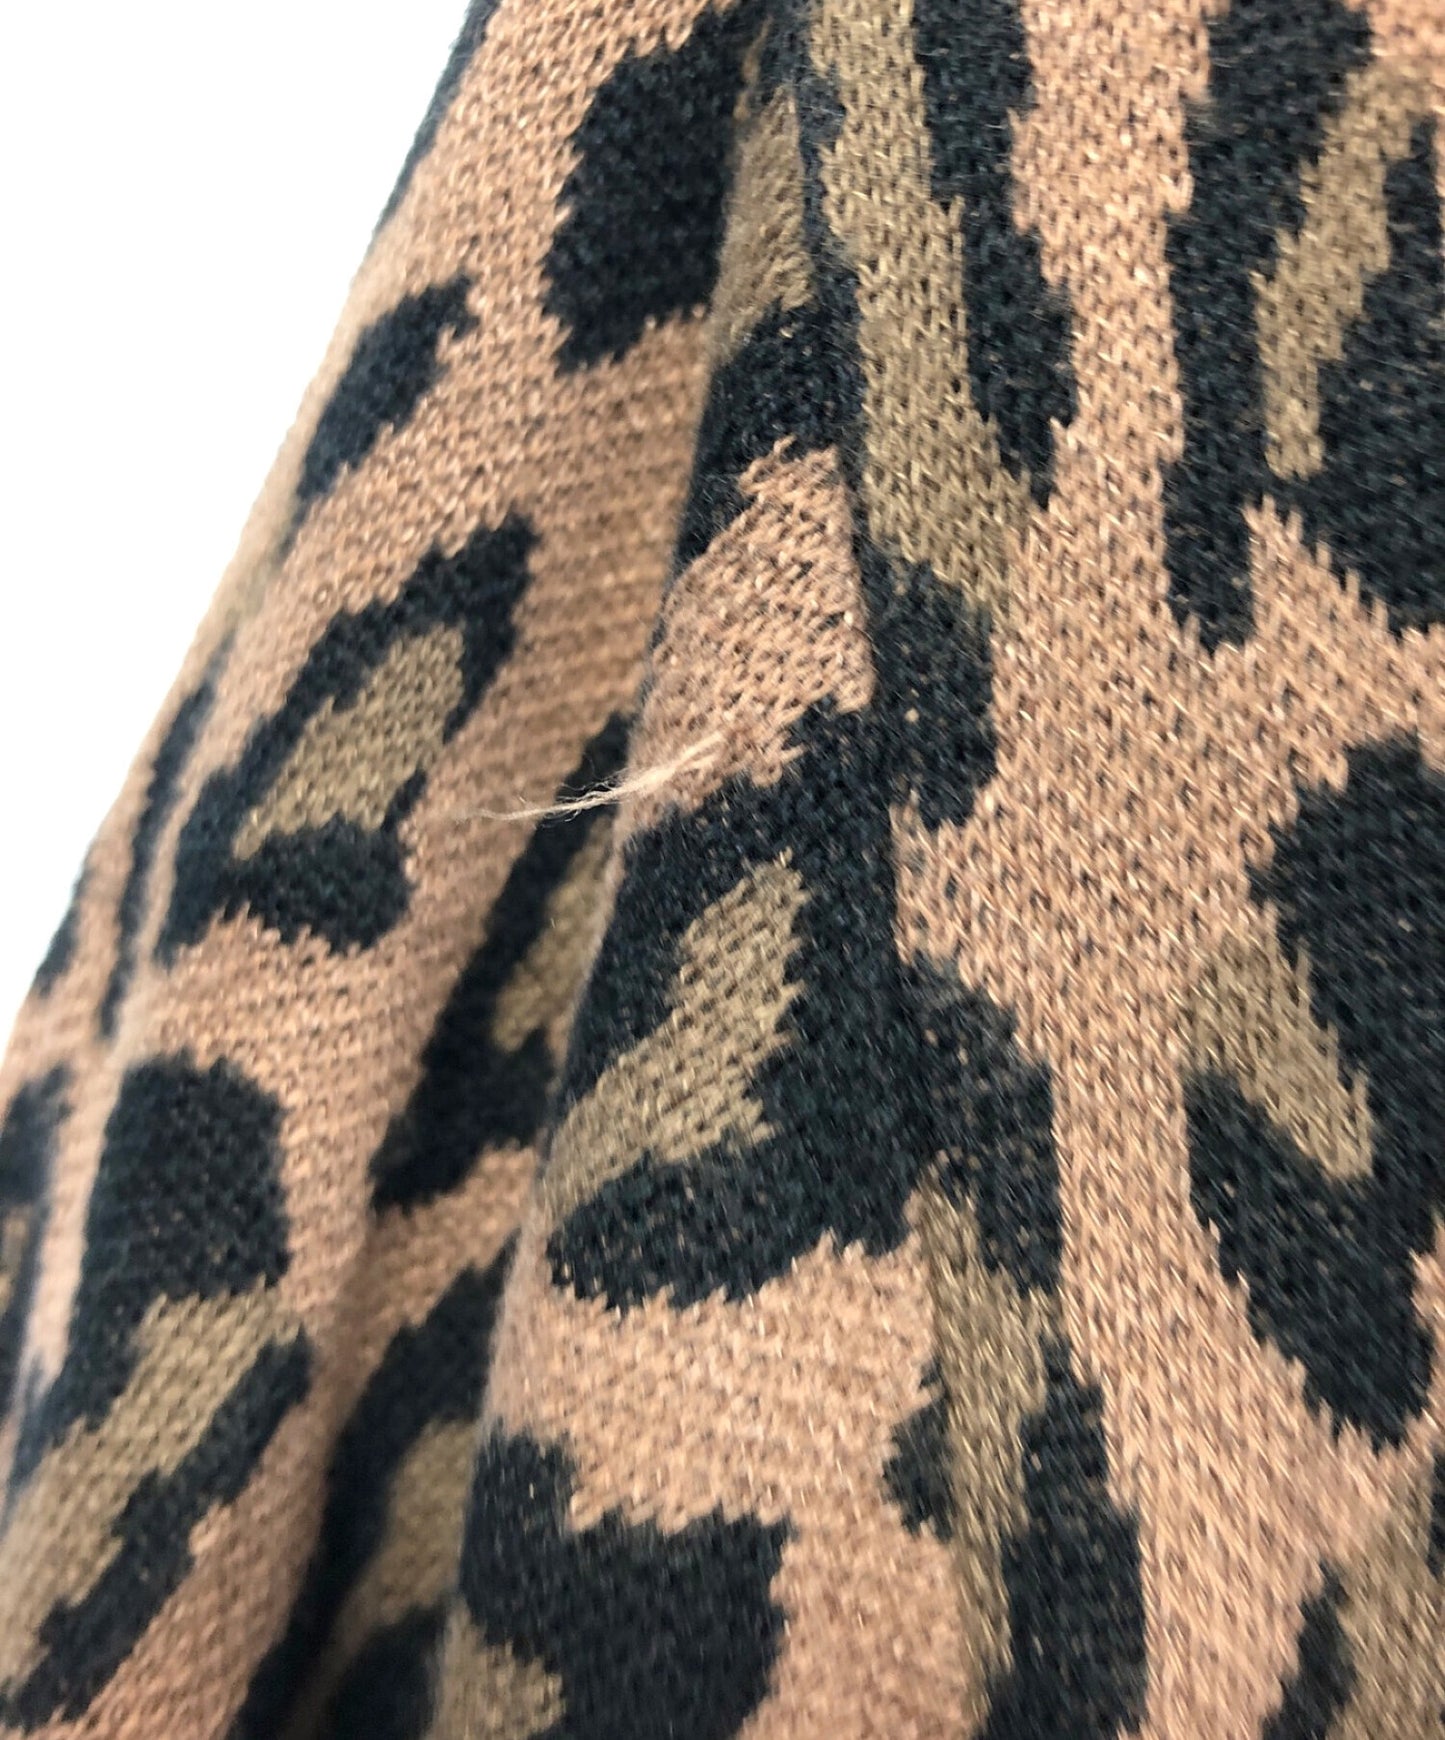 Wacko Maria Leopard Knit Jaquard Polo เสื้อเชิ้ต